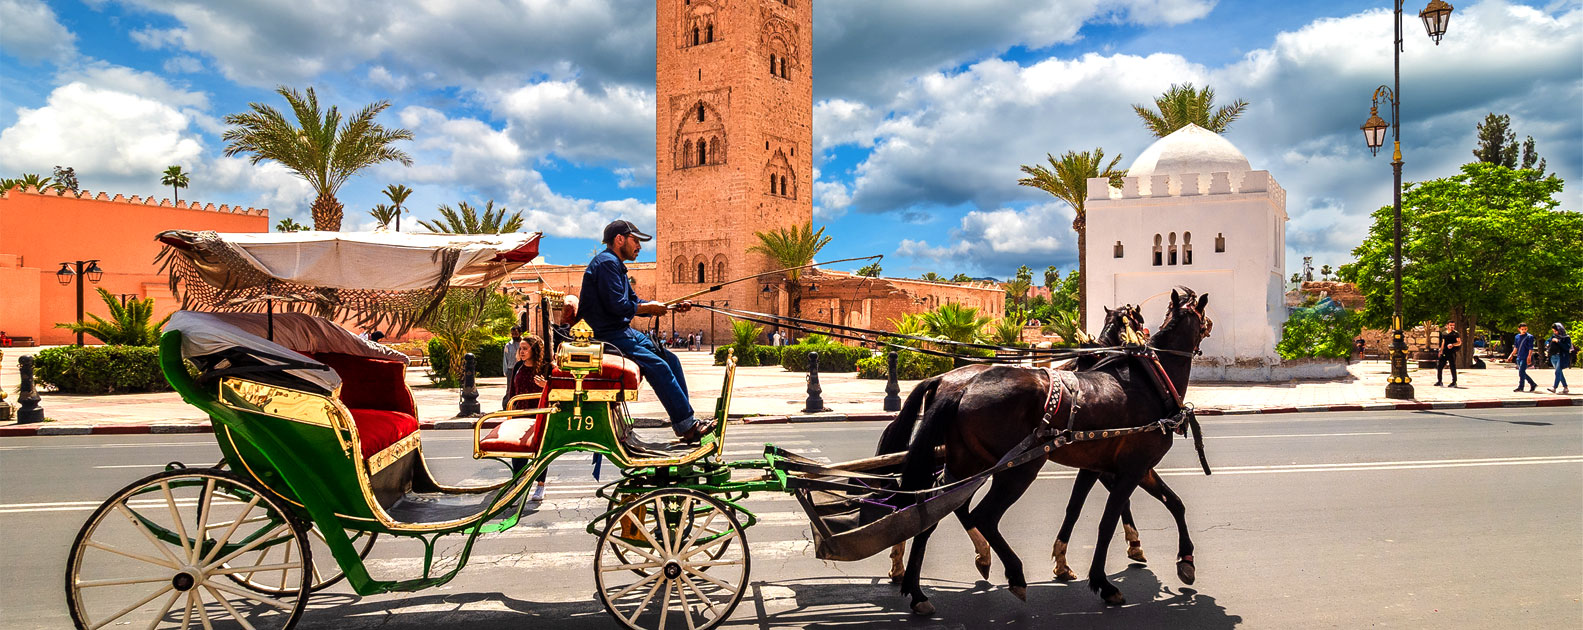 The mysterious Marrakech